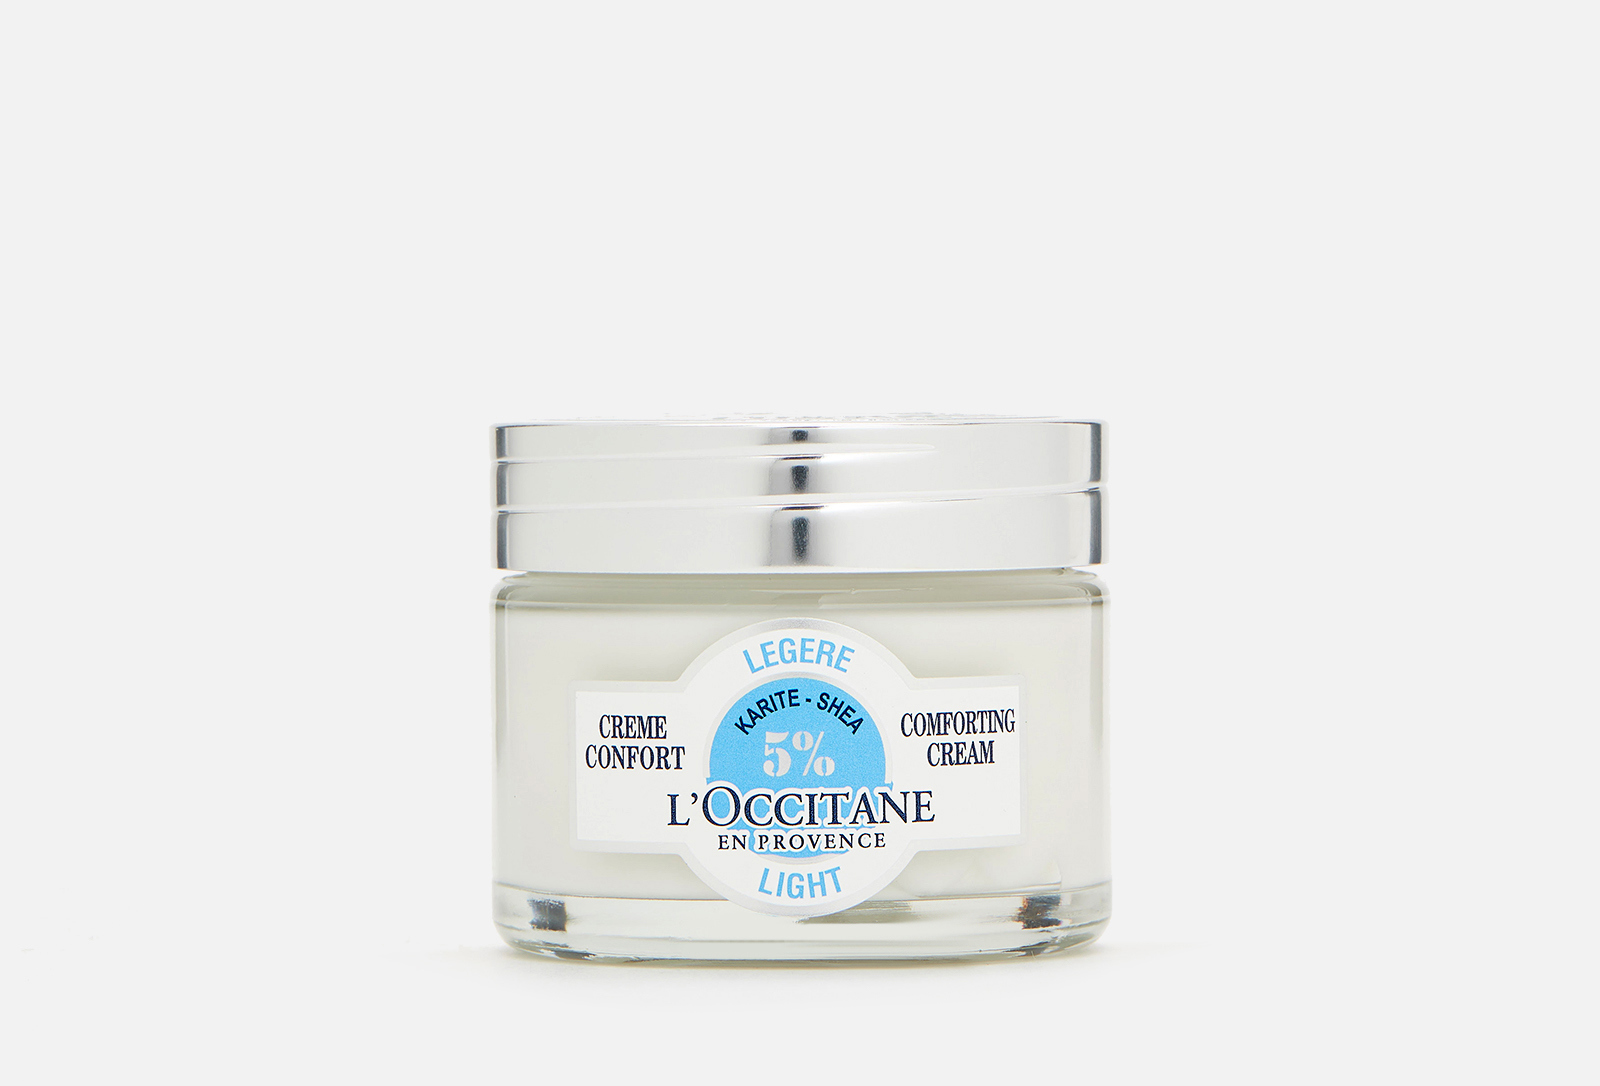 Крем loccitane для лица карите 5. Loccitane Cream Comfort Karite 5. Shea Butter база для лица крем как заказать. Butter Light.